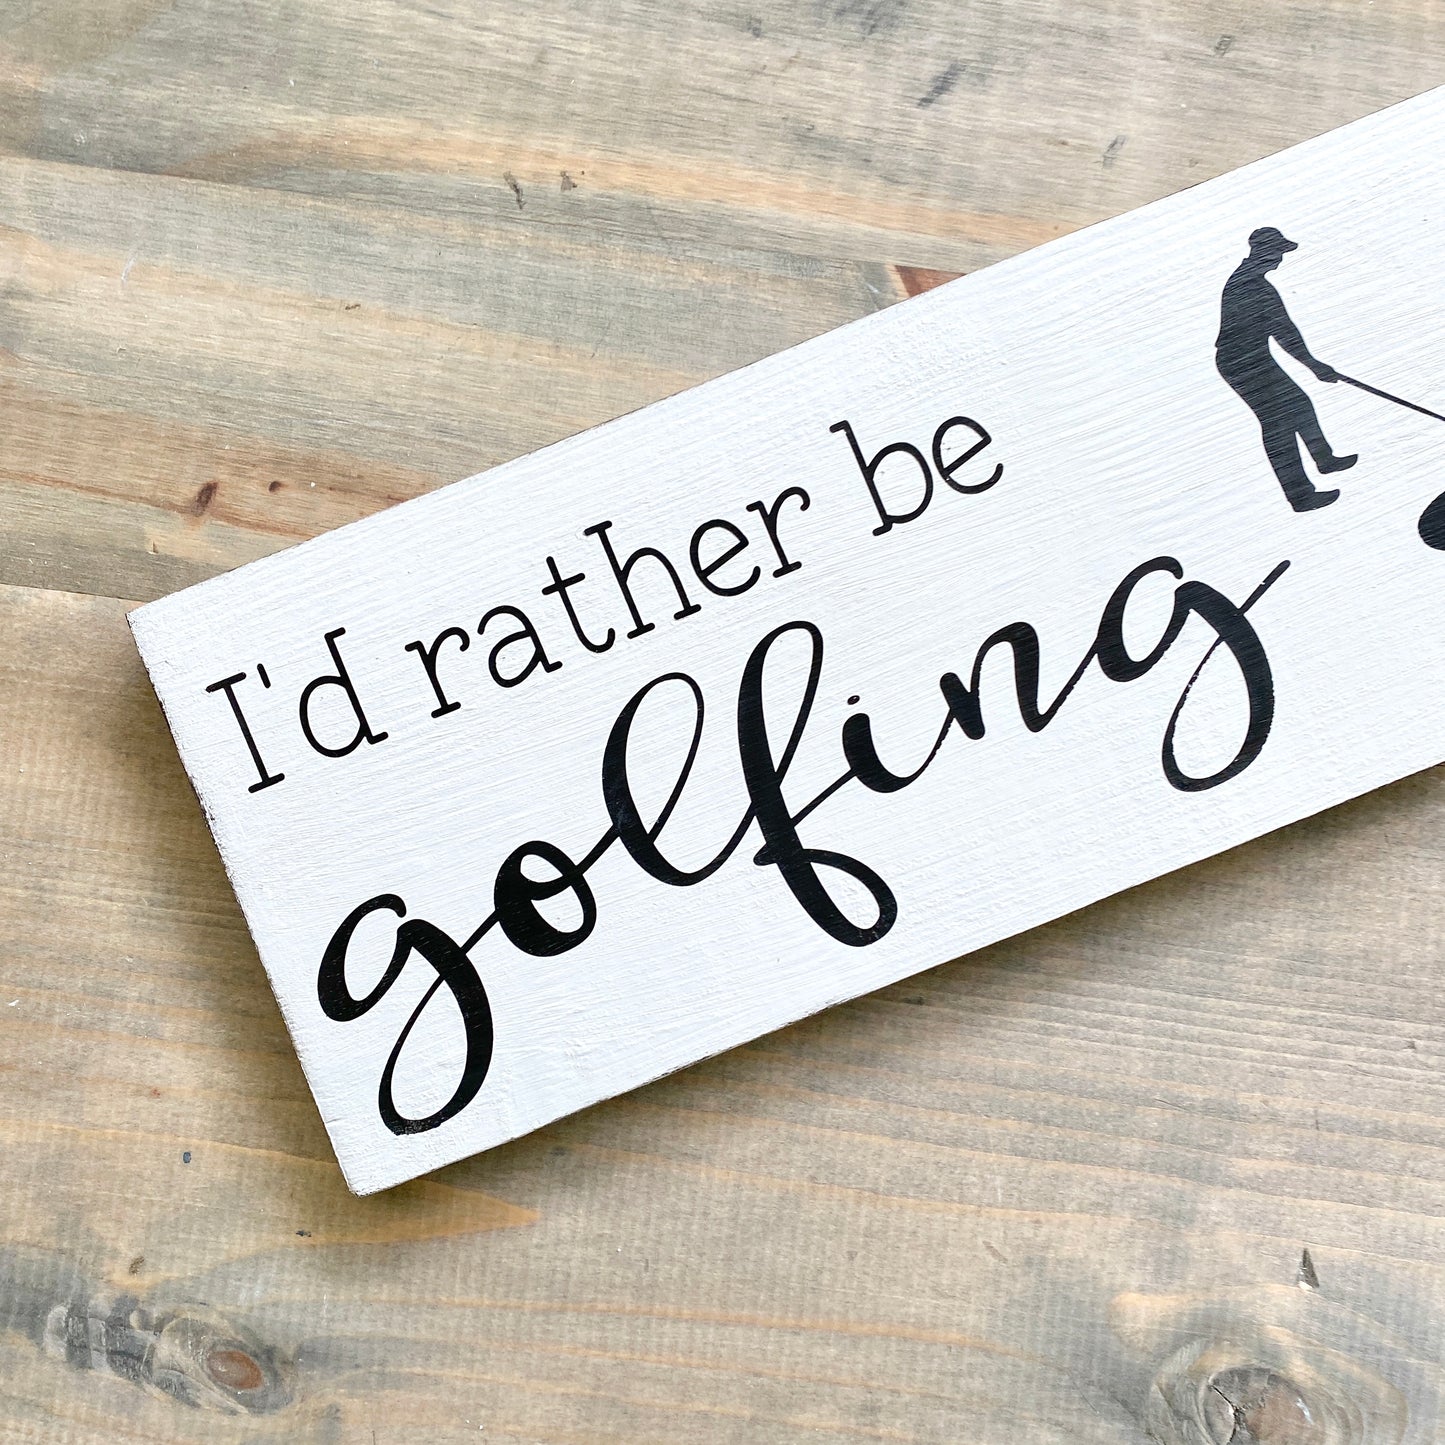 I'd Rather Be Golfing sign